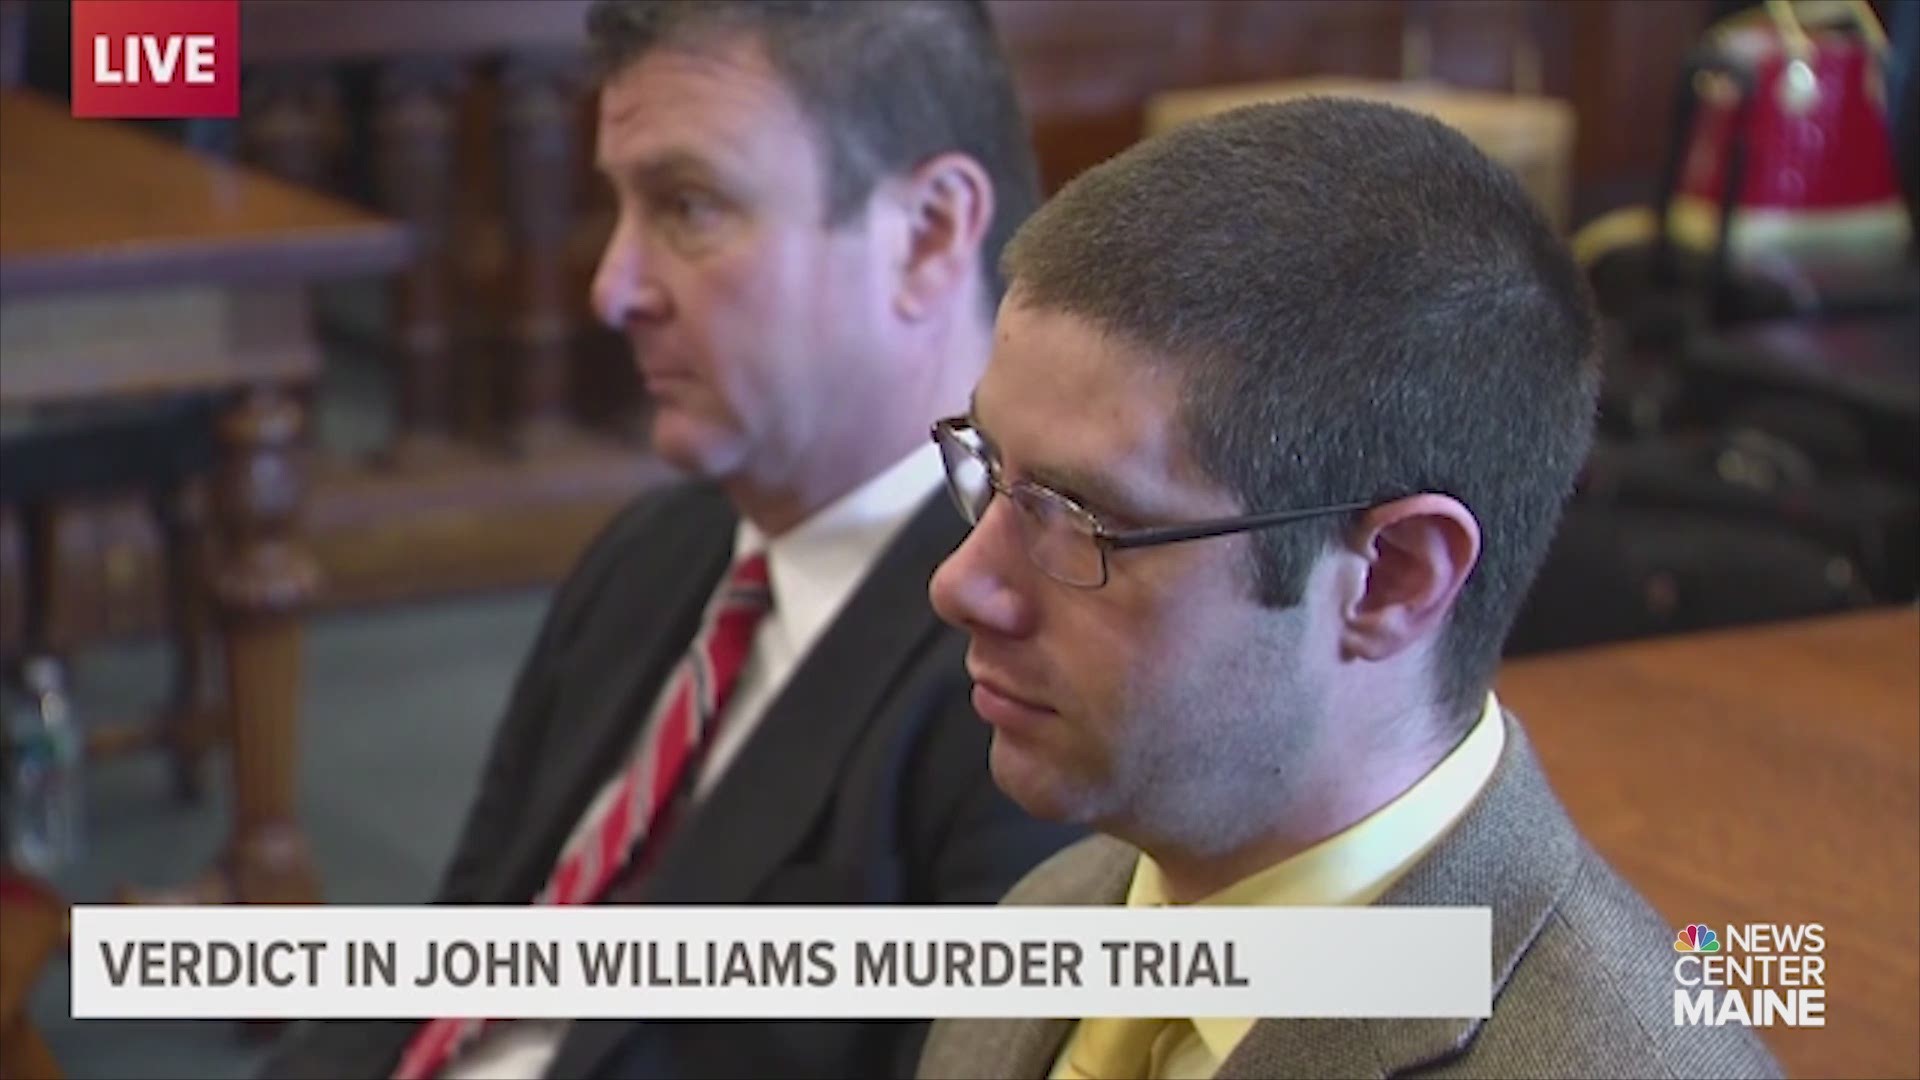 Verdict is announced in murder trial of John Williams, accused of killing Cpl. Eugene Cole